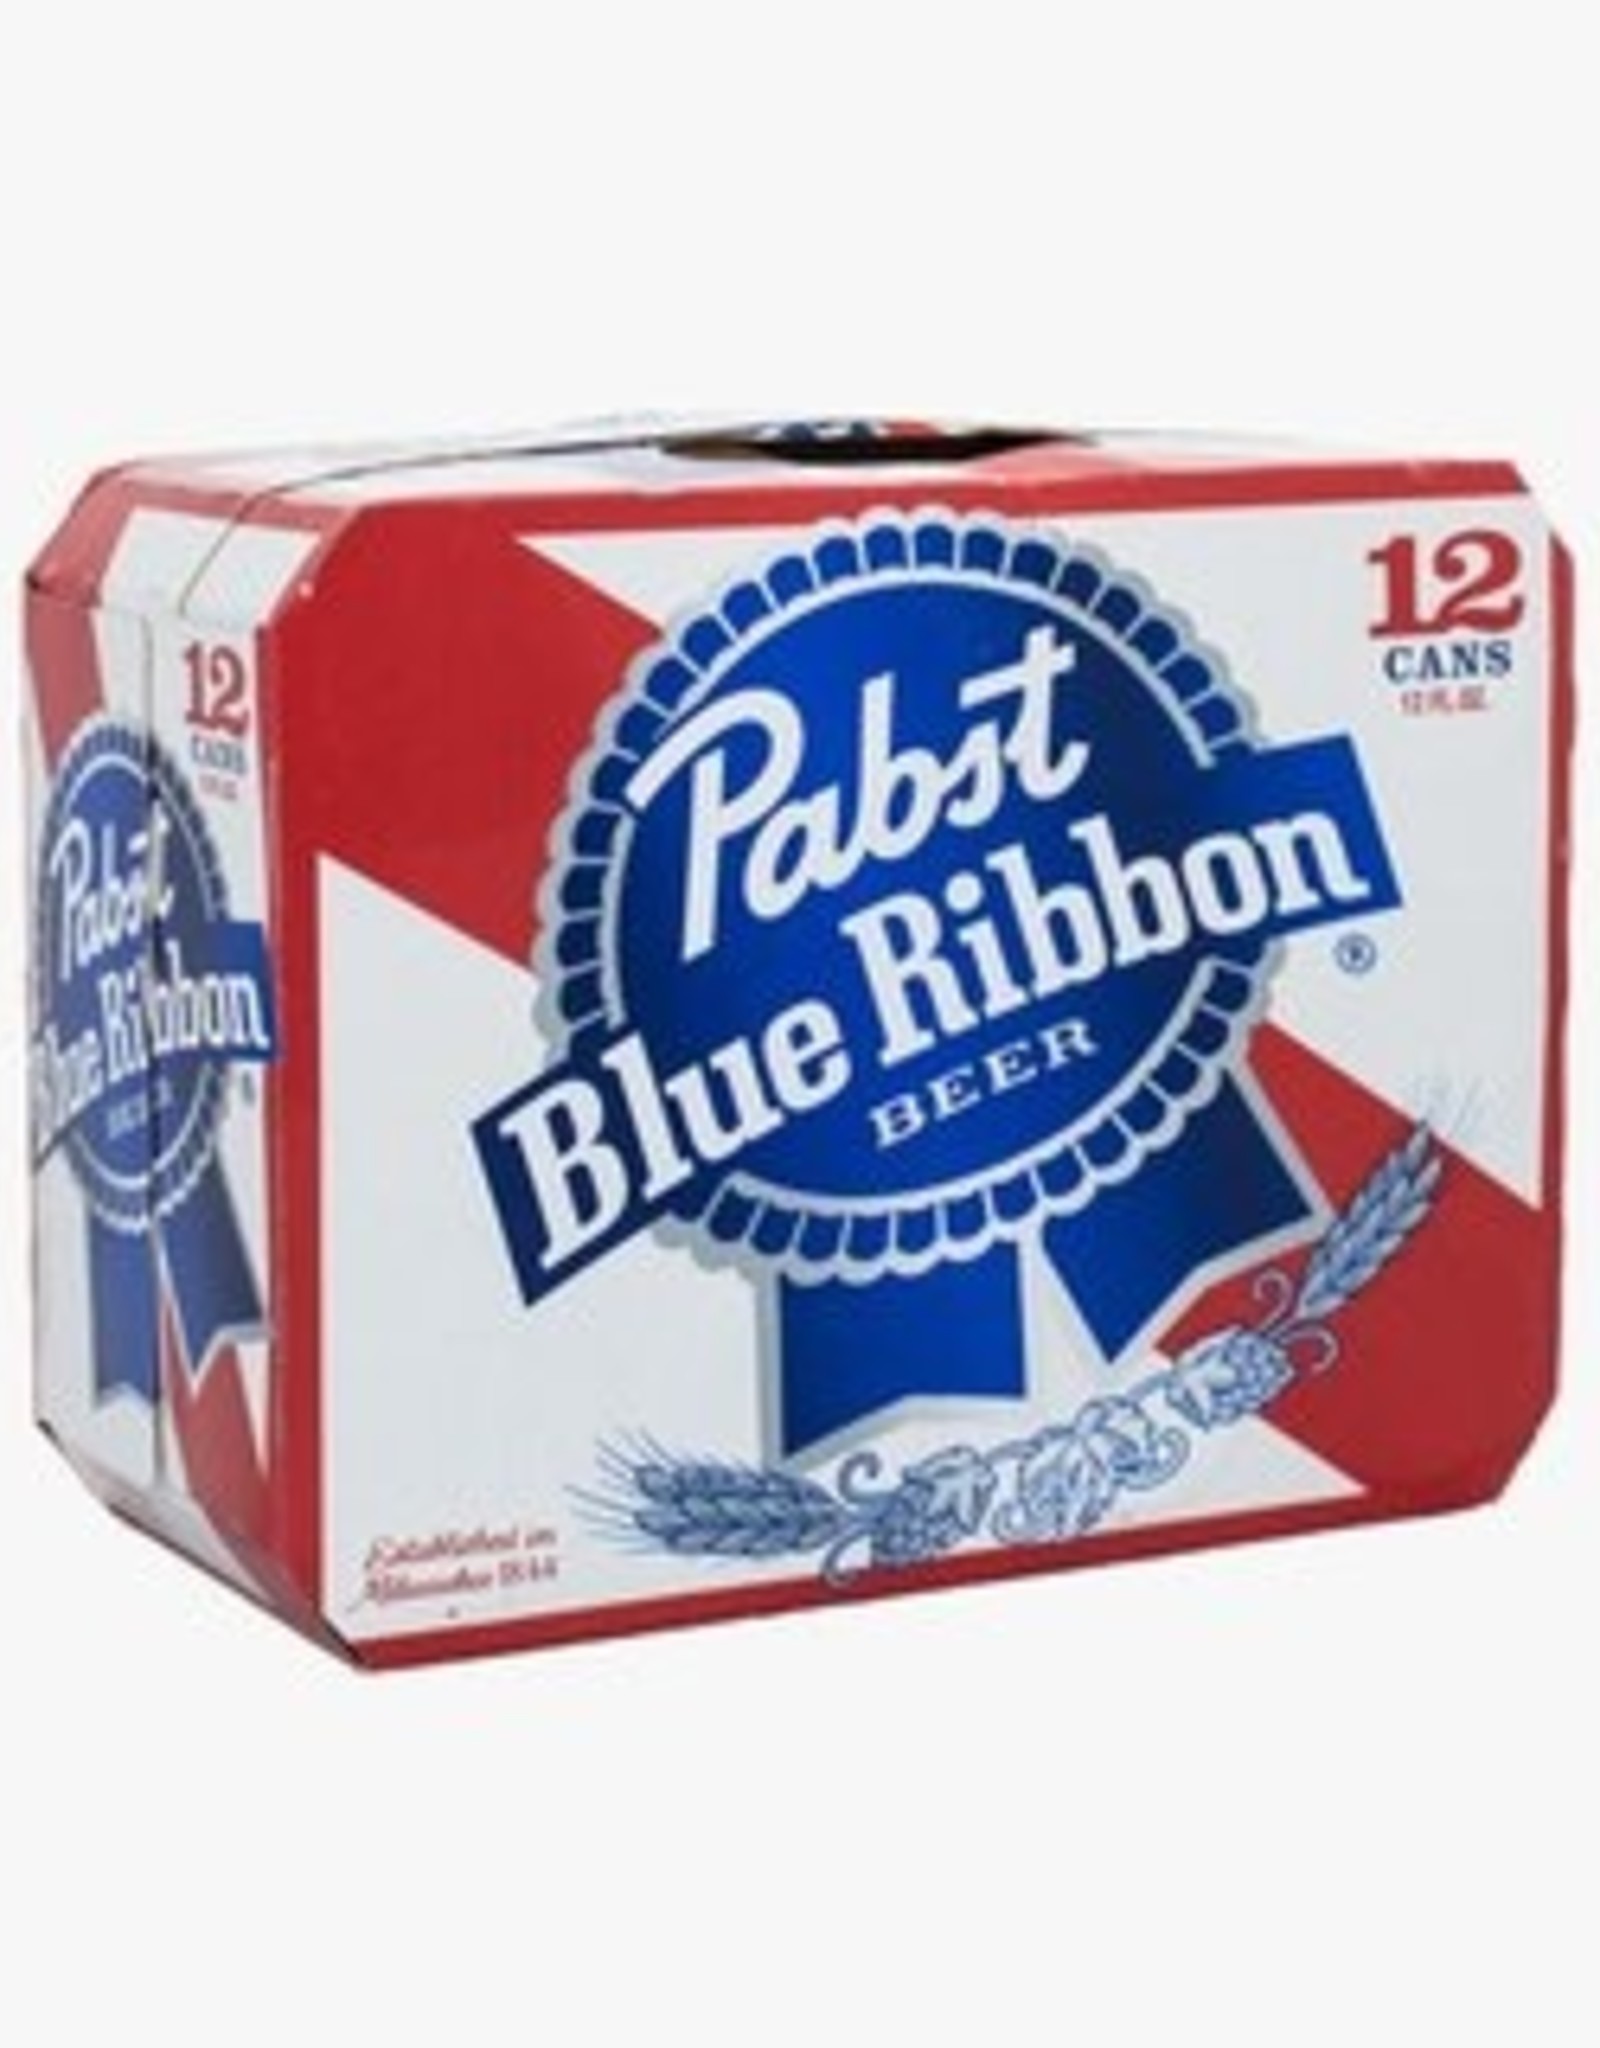 Pabst Blue Ribbon 12x12 oz cans